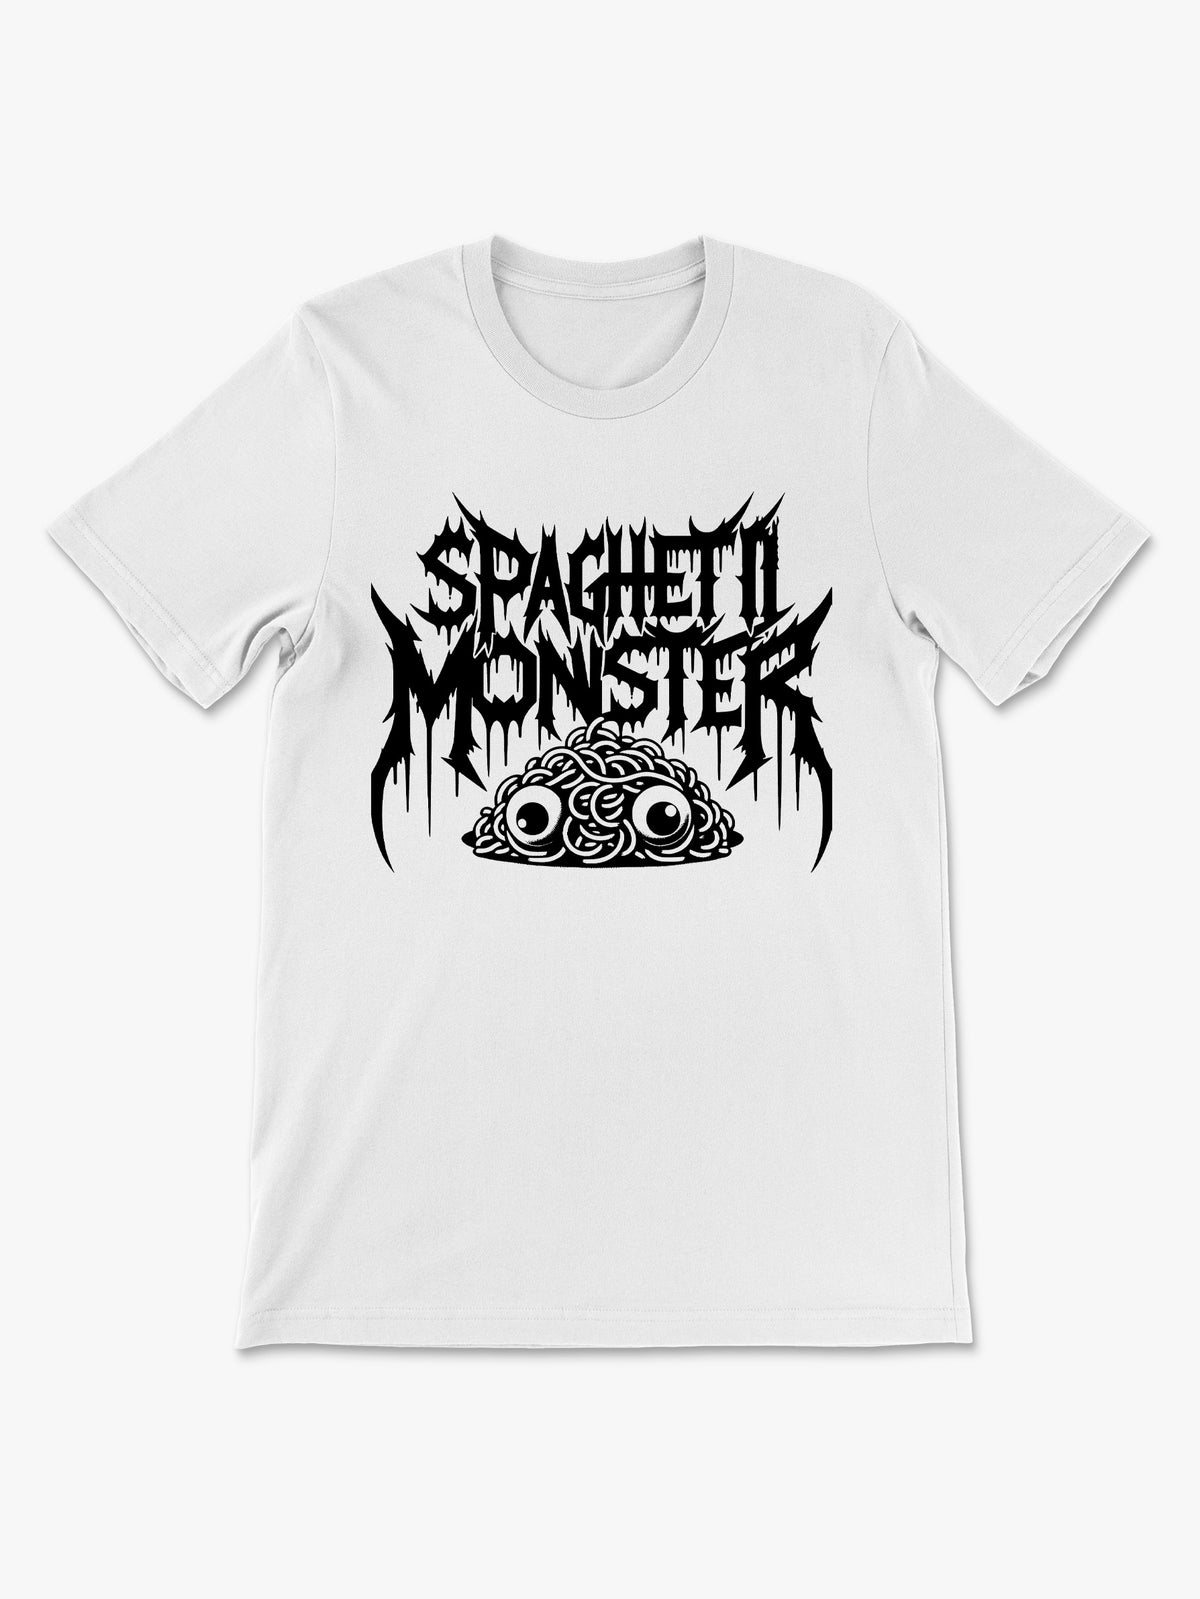 The Spaghetti Monster by Spaghetti Monster